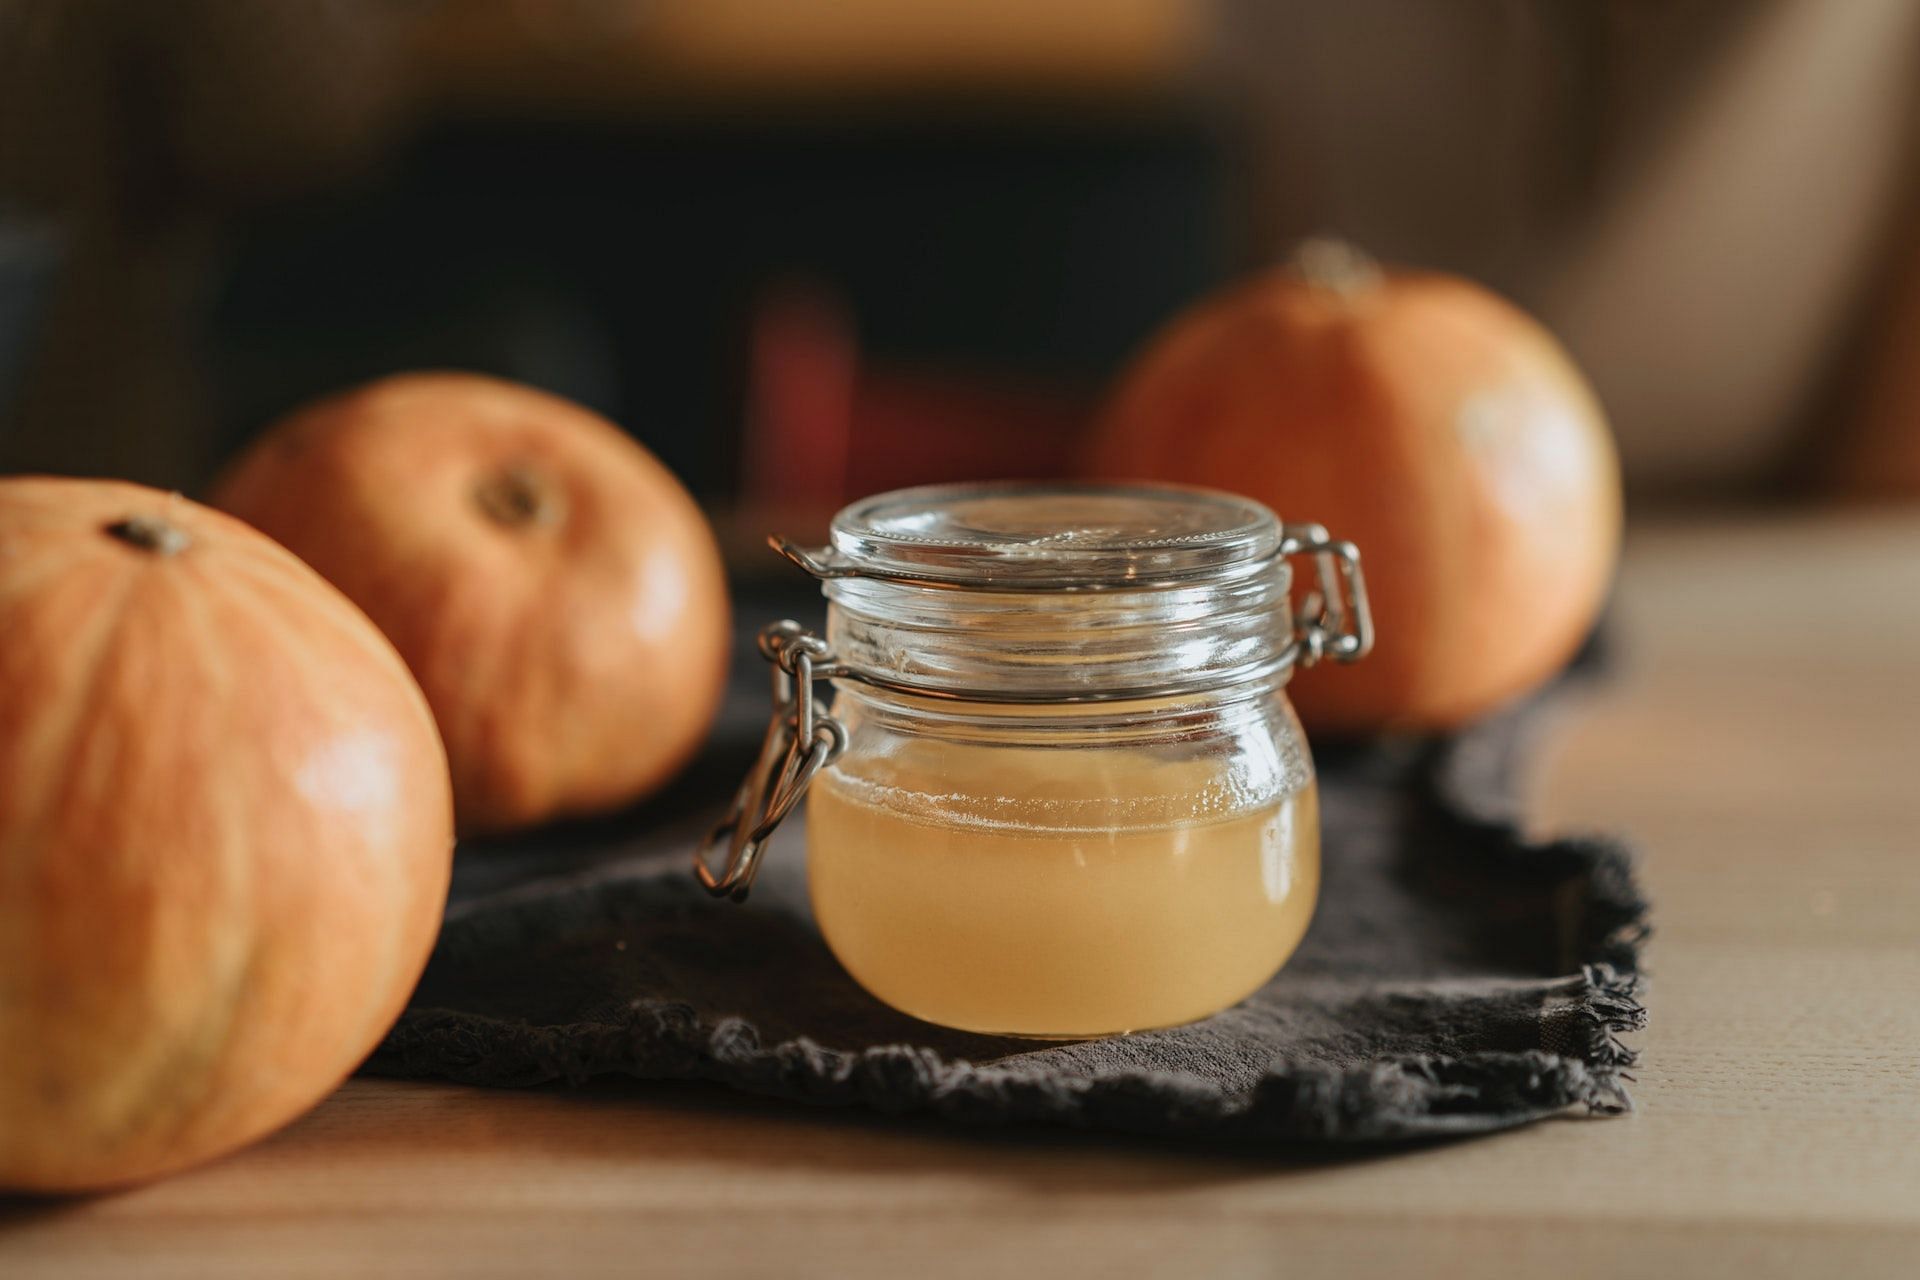 Apple cider vinegar benefits for hair are plenty. (Photo via Pexels/olia danilevich)